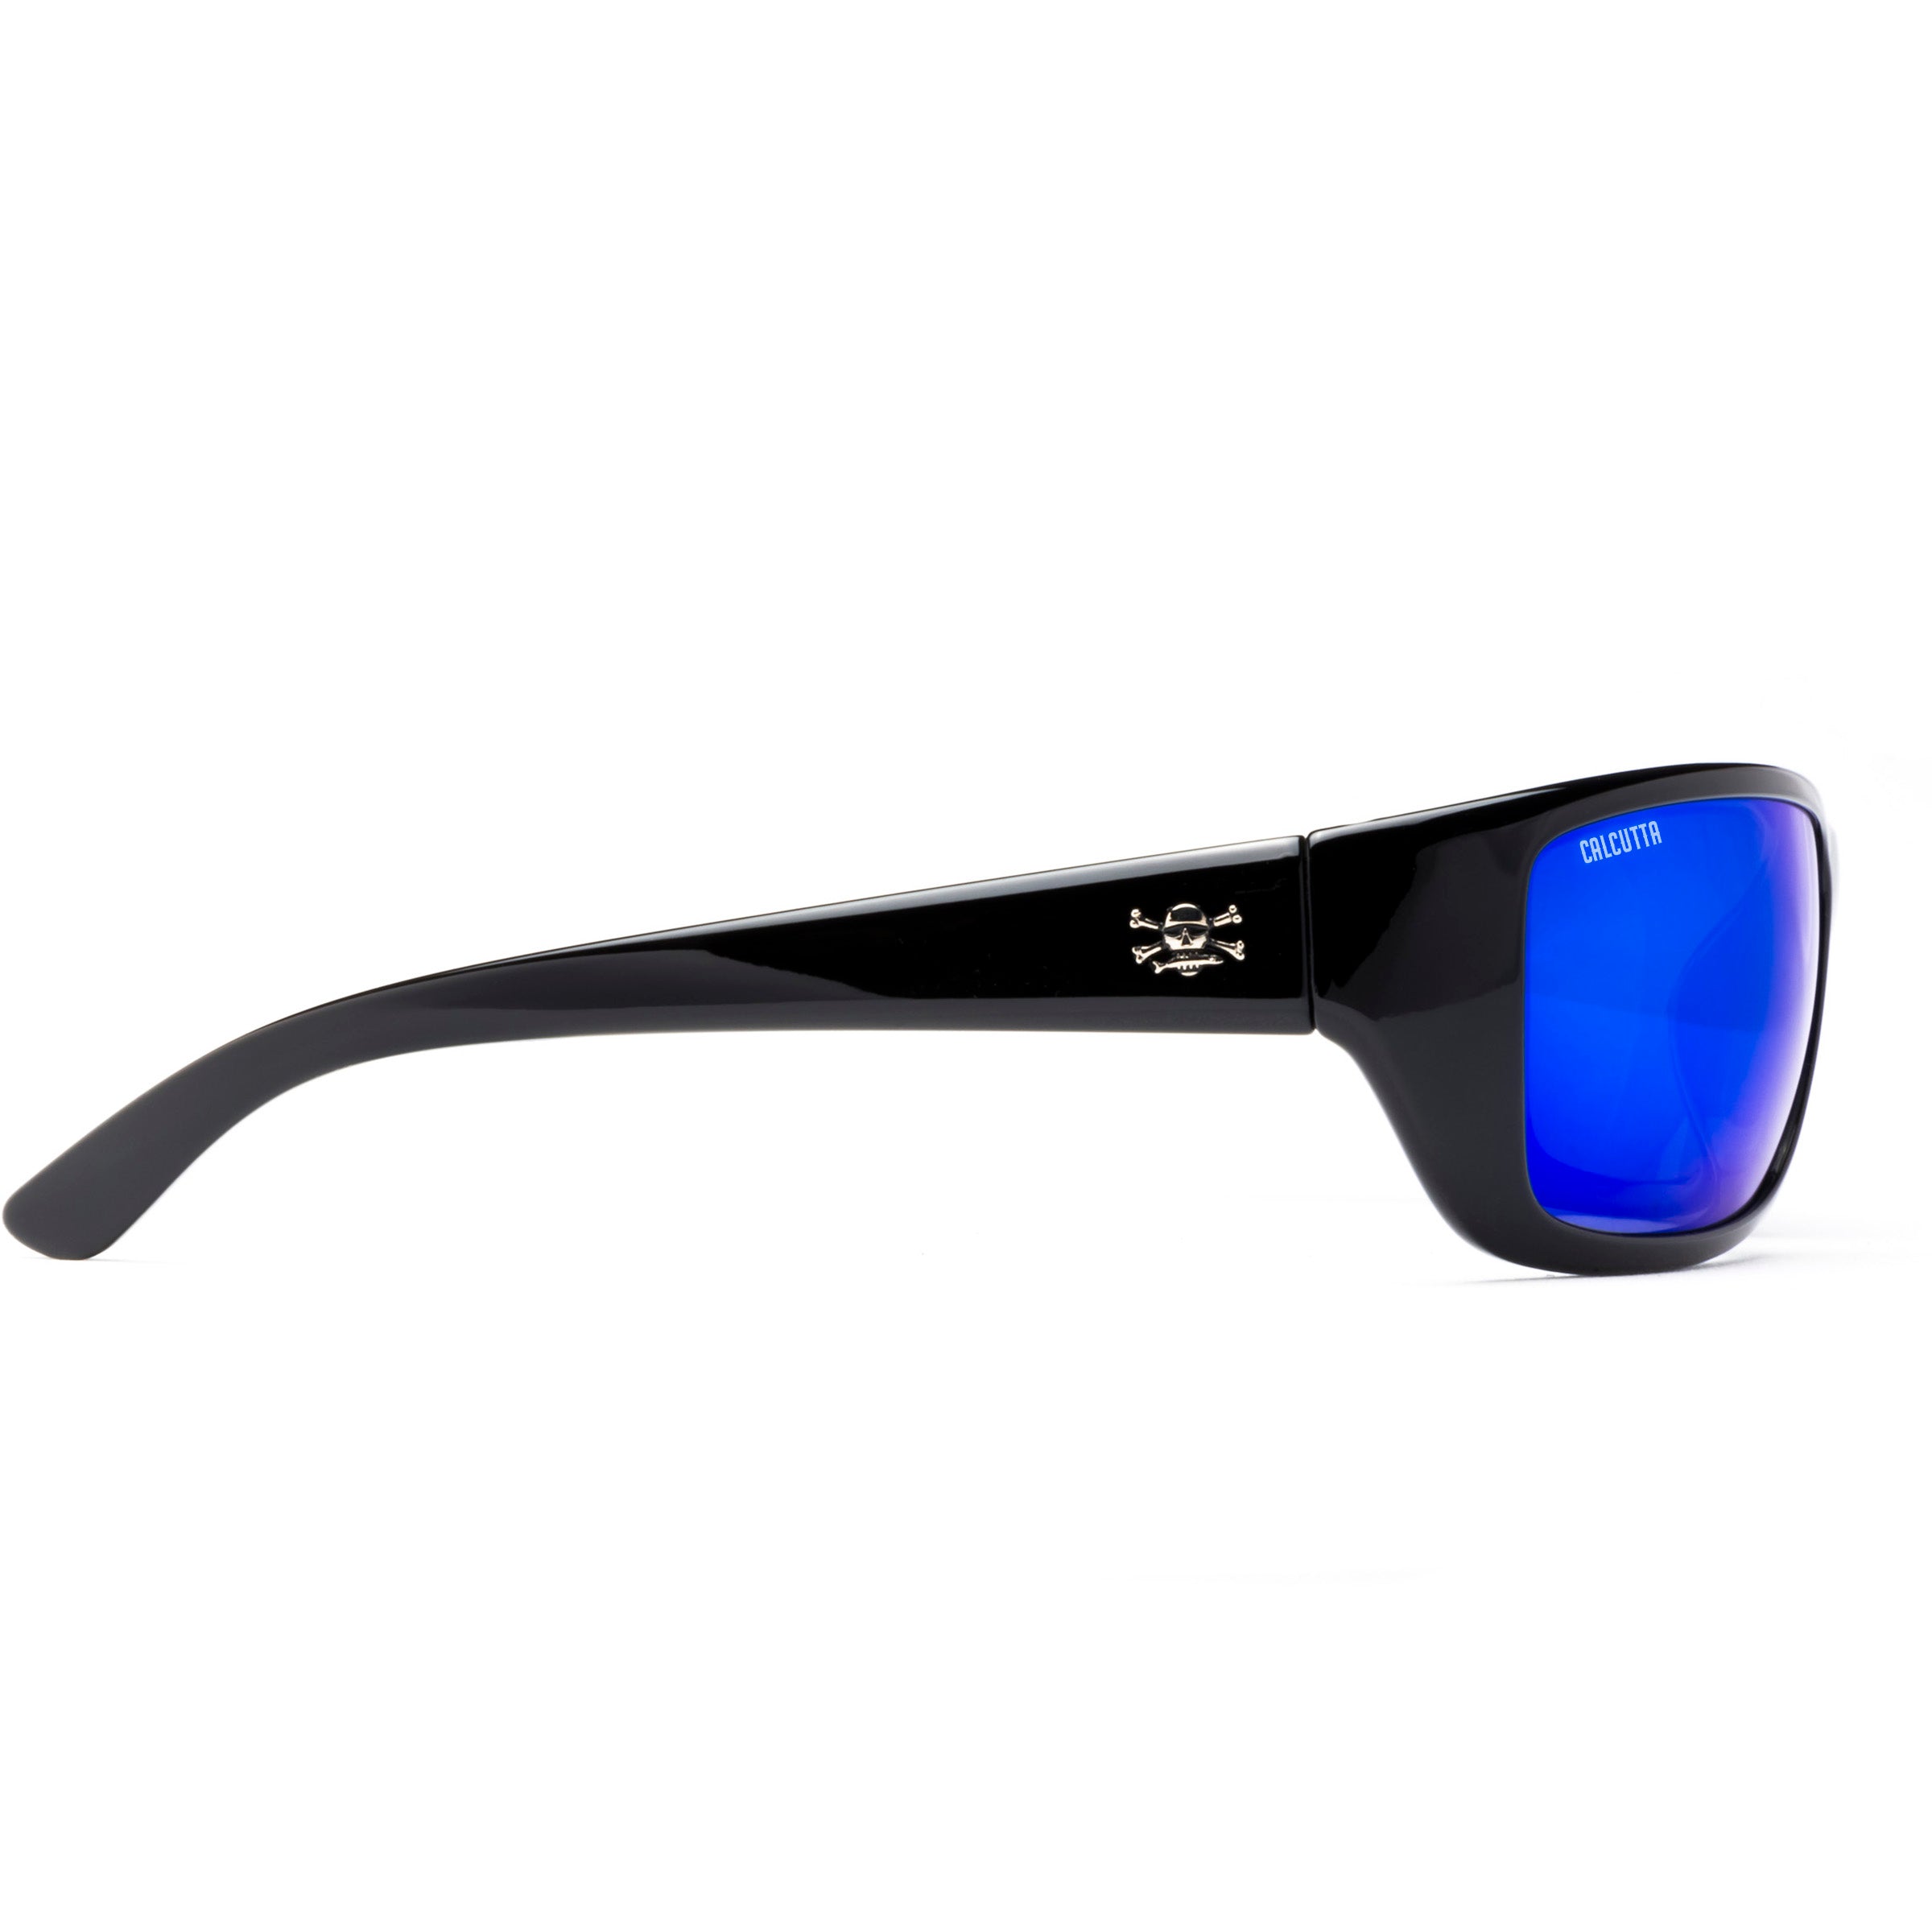 Calcutta Boca sunglasses black frame blue mirror lens side